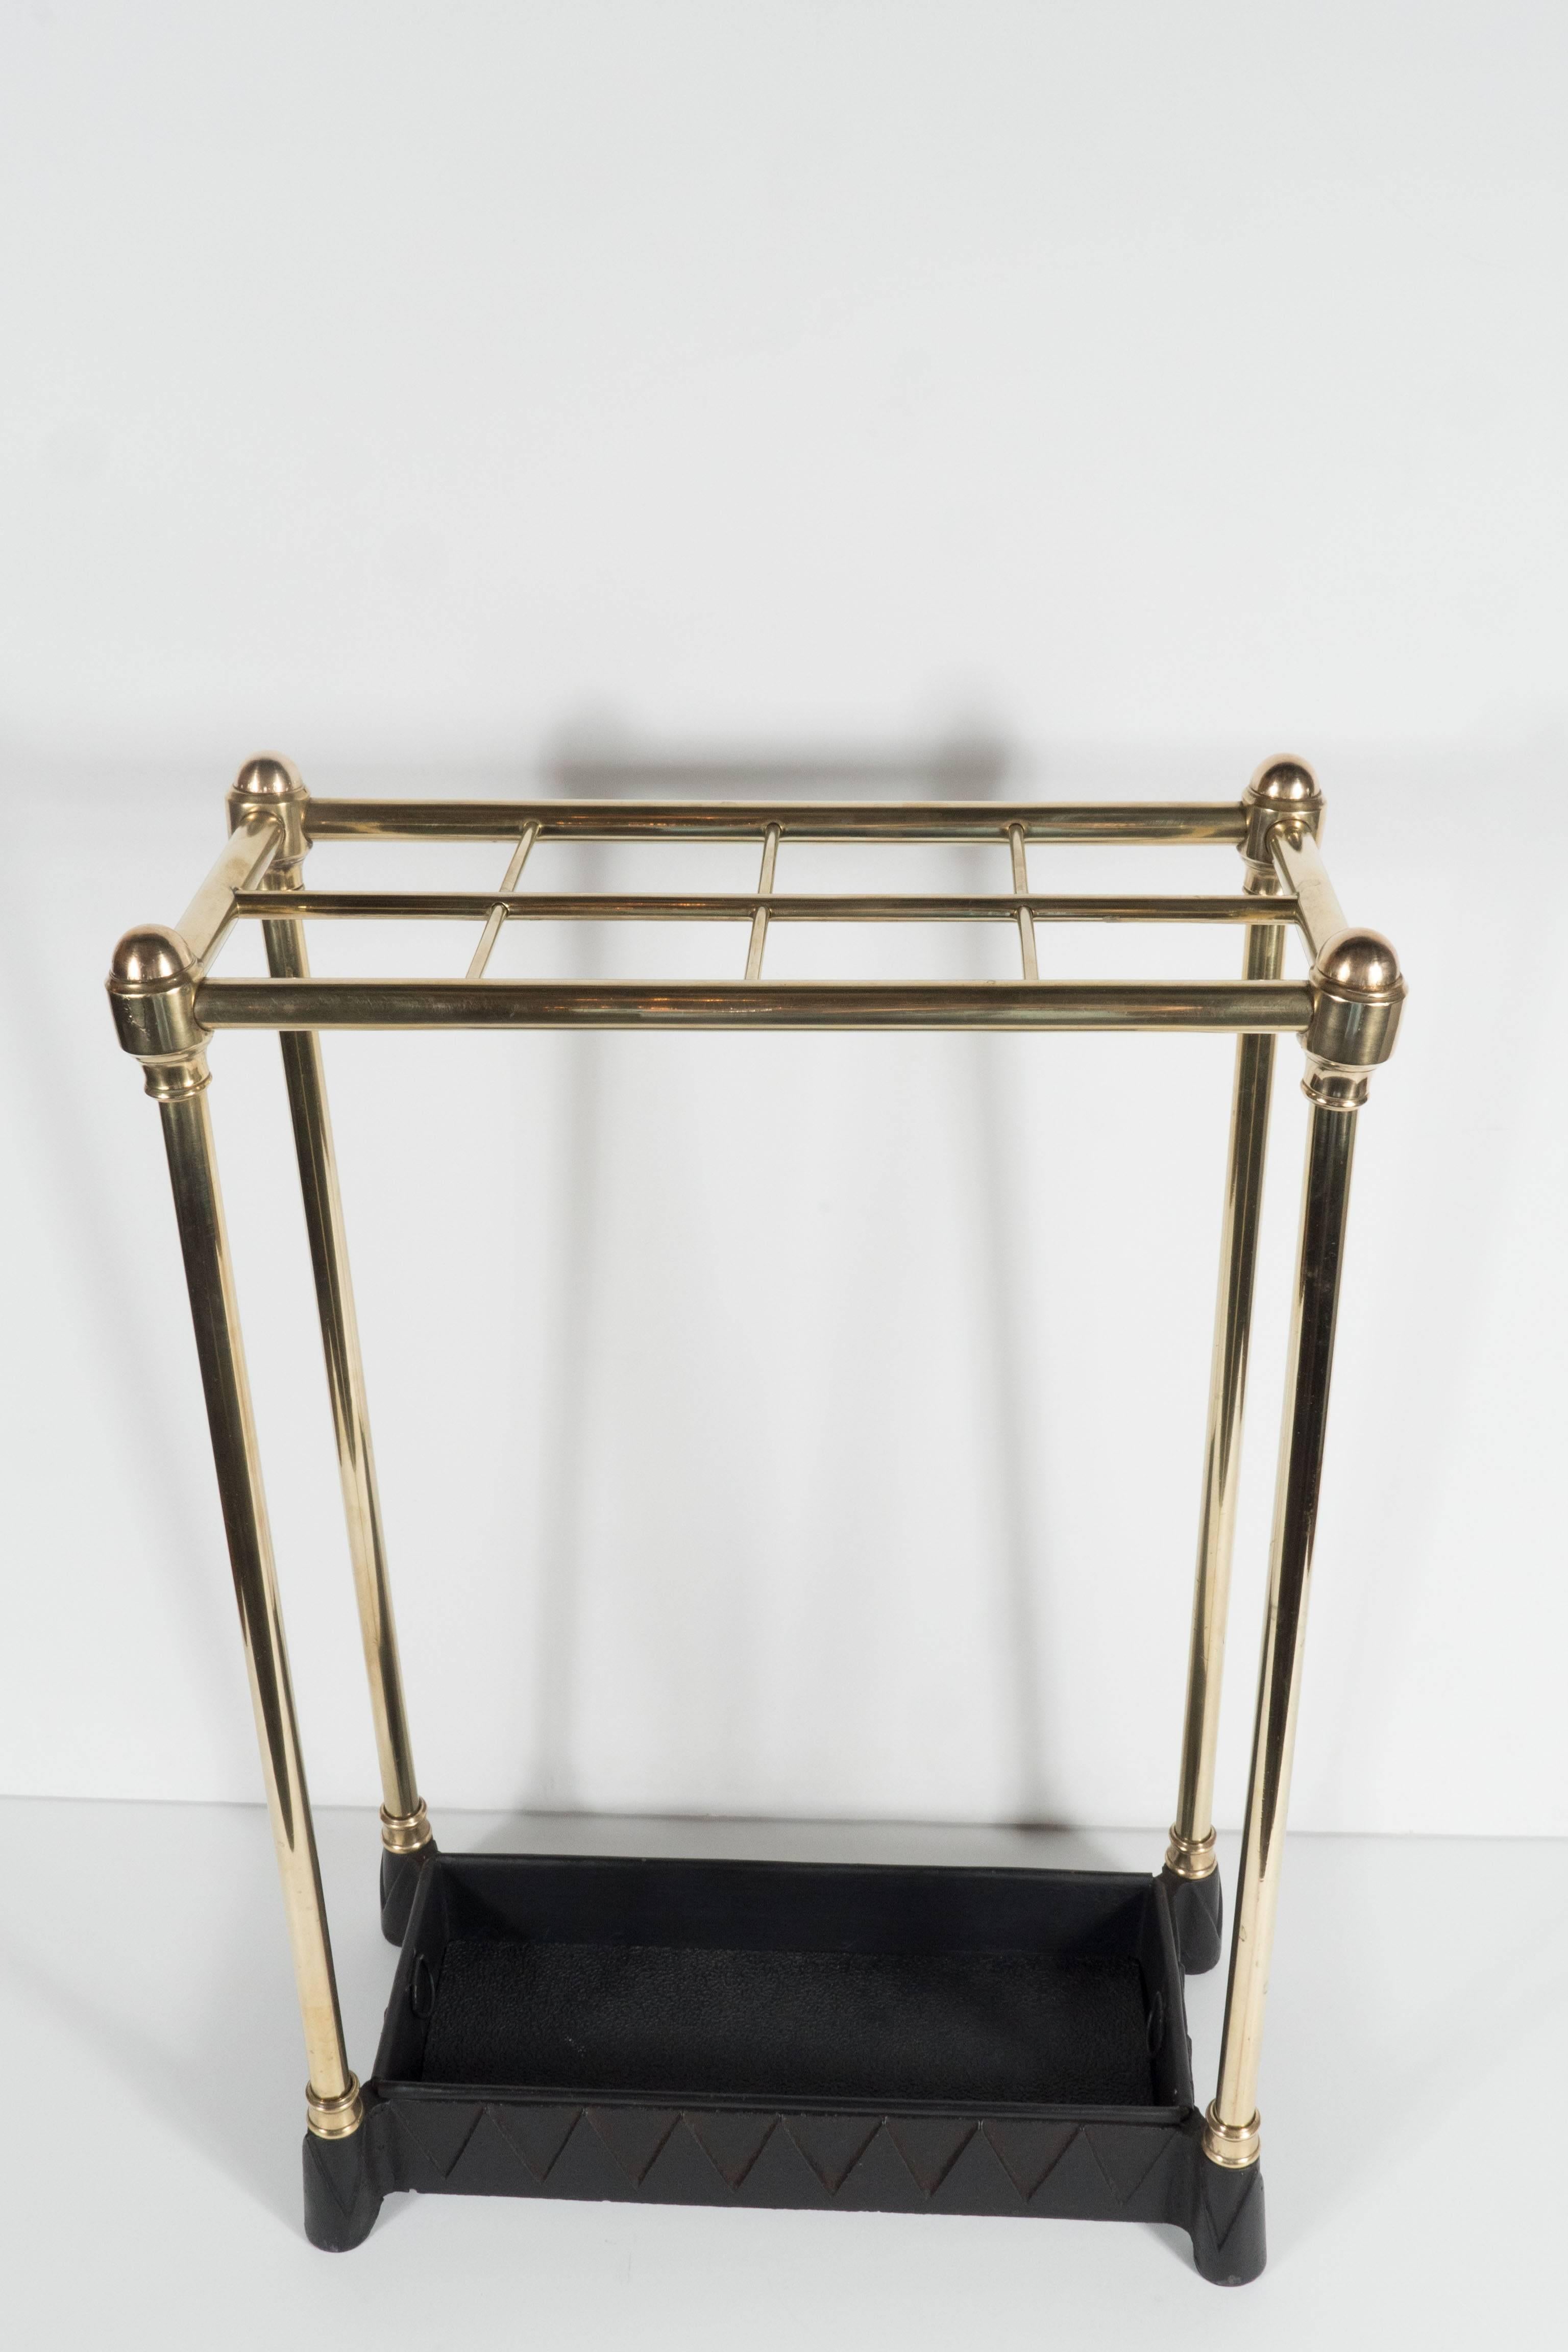 American Art Deco Machine Age Umbrella Stand in Brass and Black Enamel